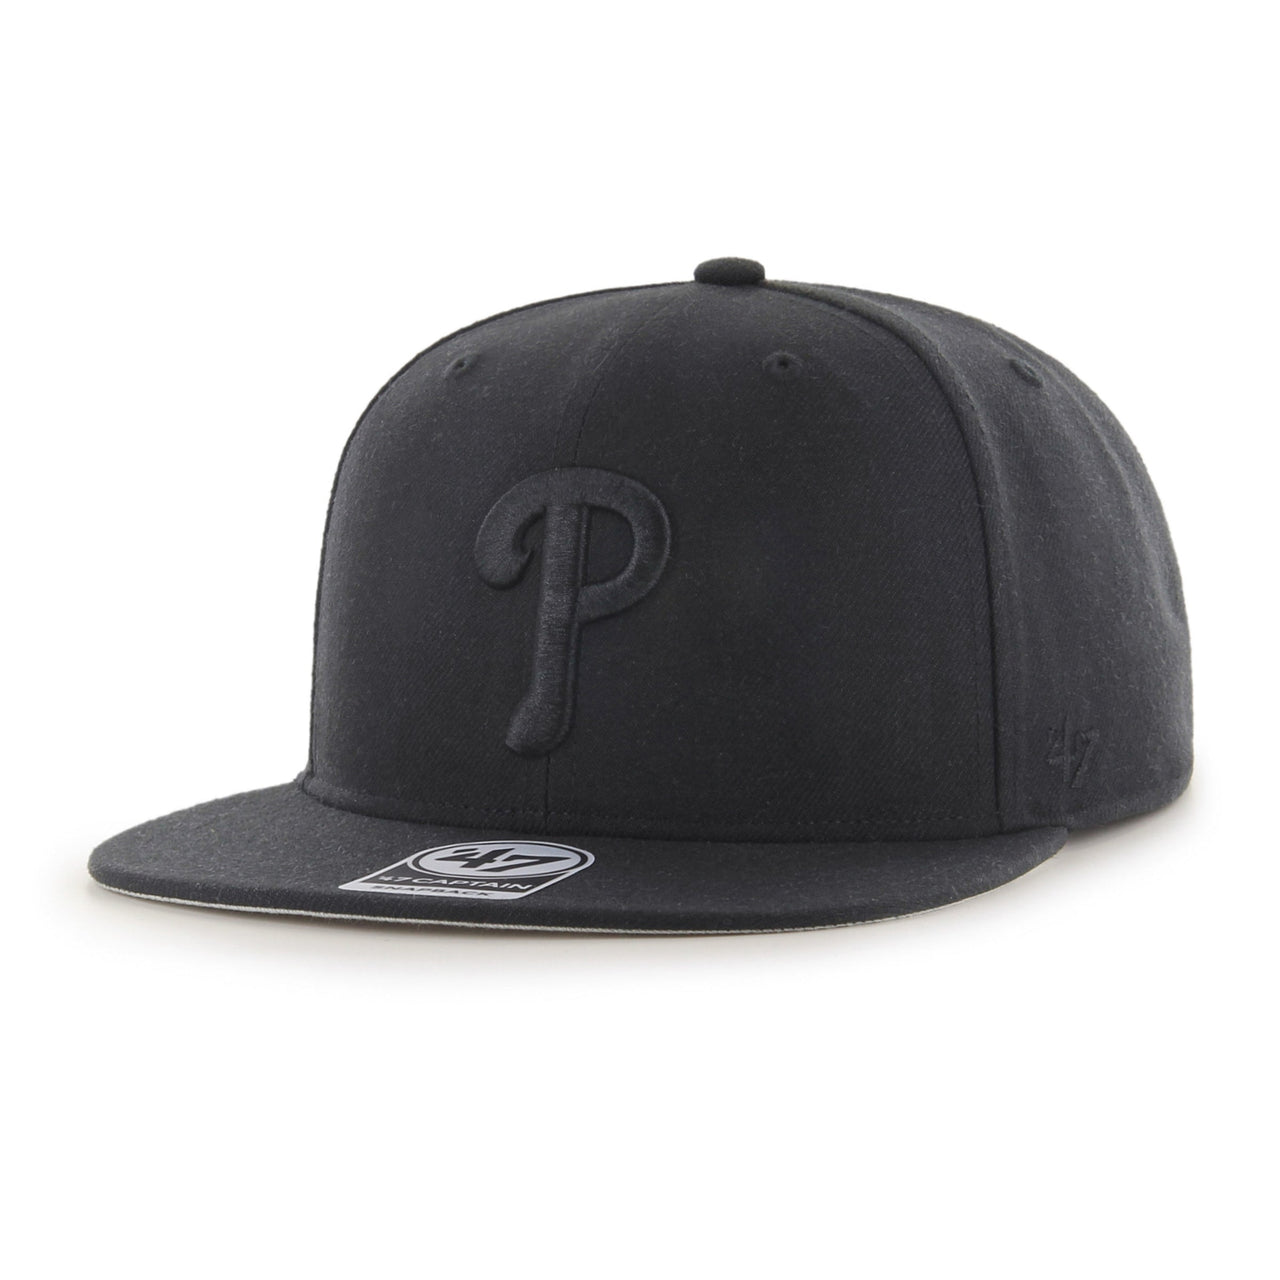 The Philadelphia Phillies Gray Bottom Black On Black Snapback Cap | Black Snapback Cap